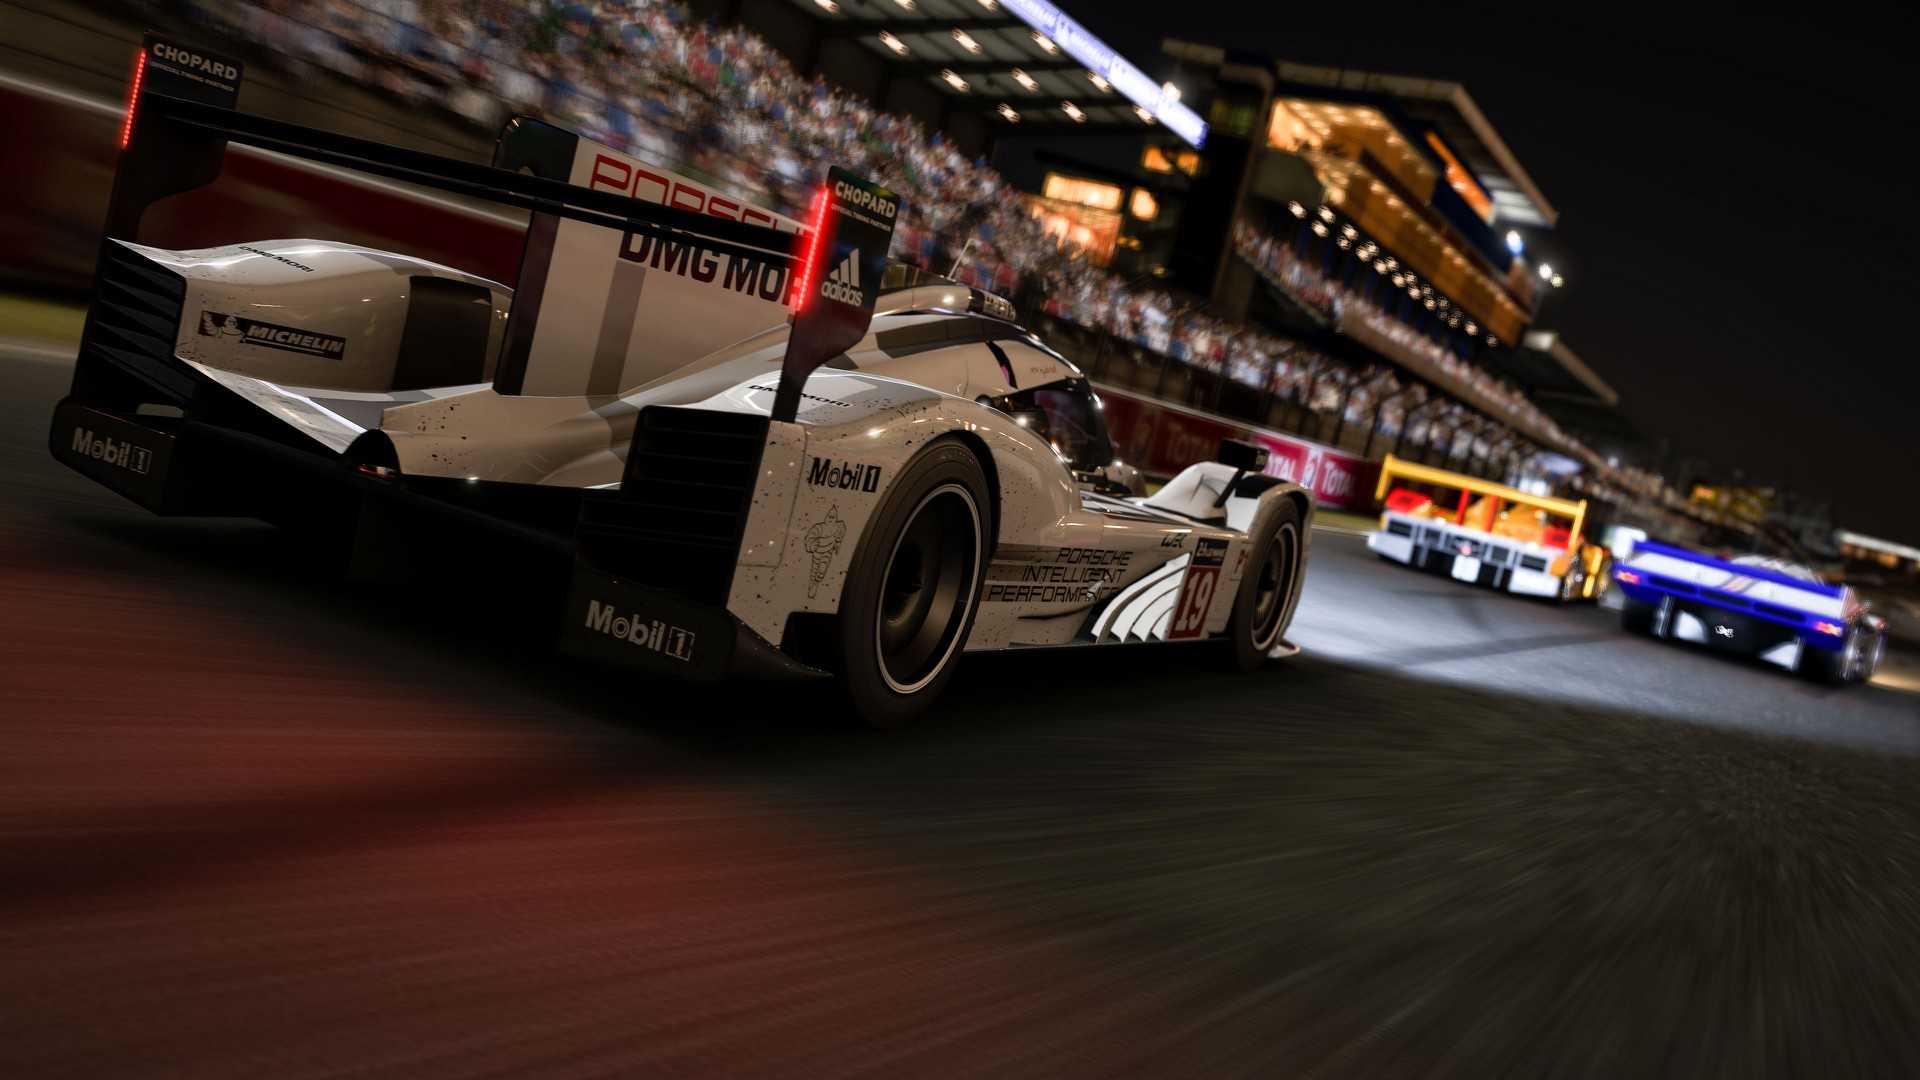 Porsche, Microsoft Organizing Forza 6 Marathon During Le Mans